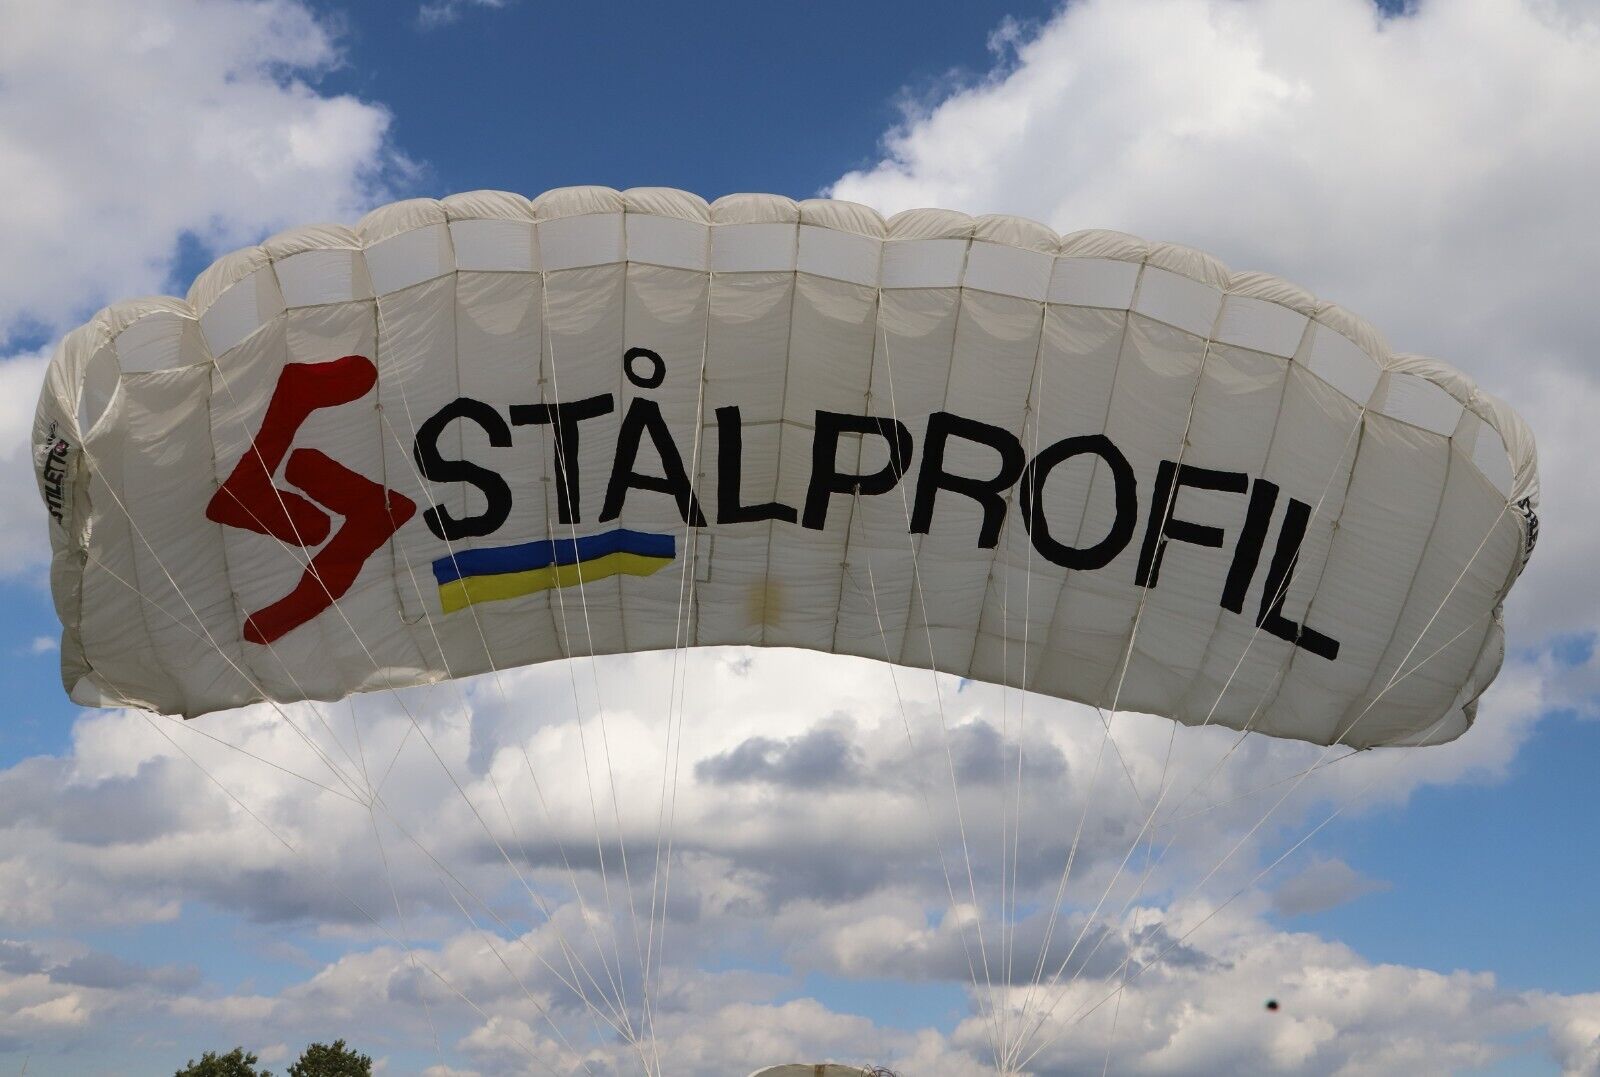 Stiletto 120 Zp 9 Cell Skydiving Parachute Performance Designs Stalprofil